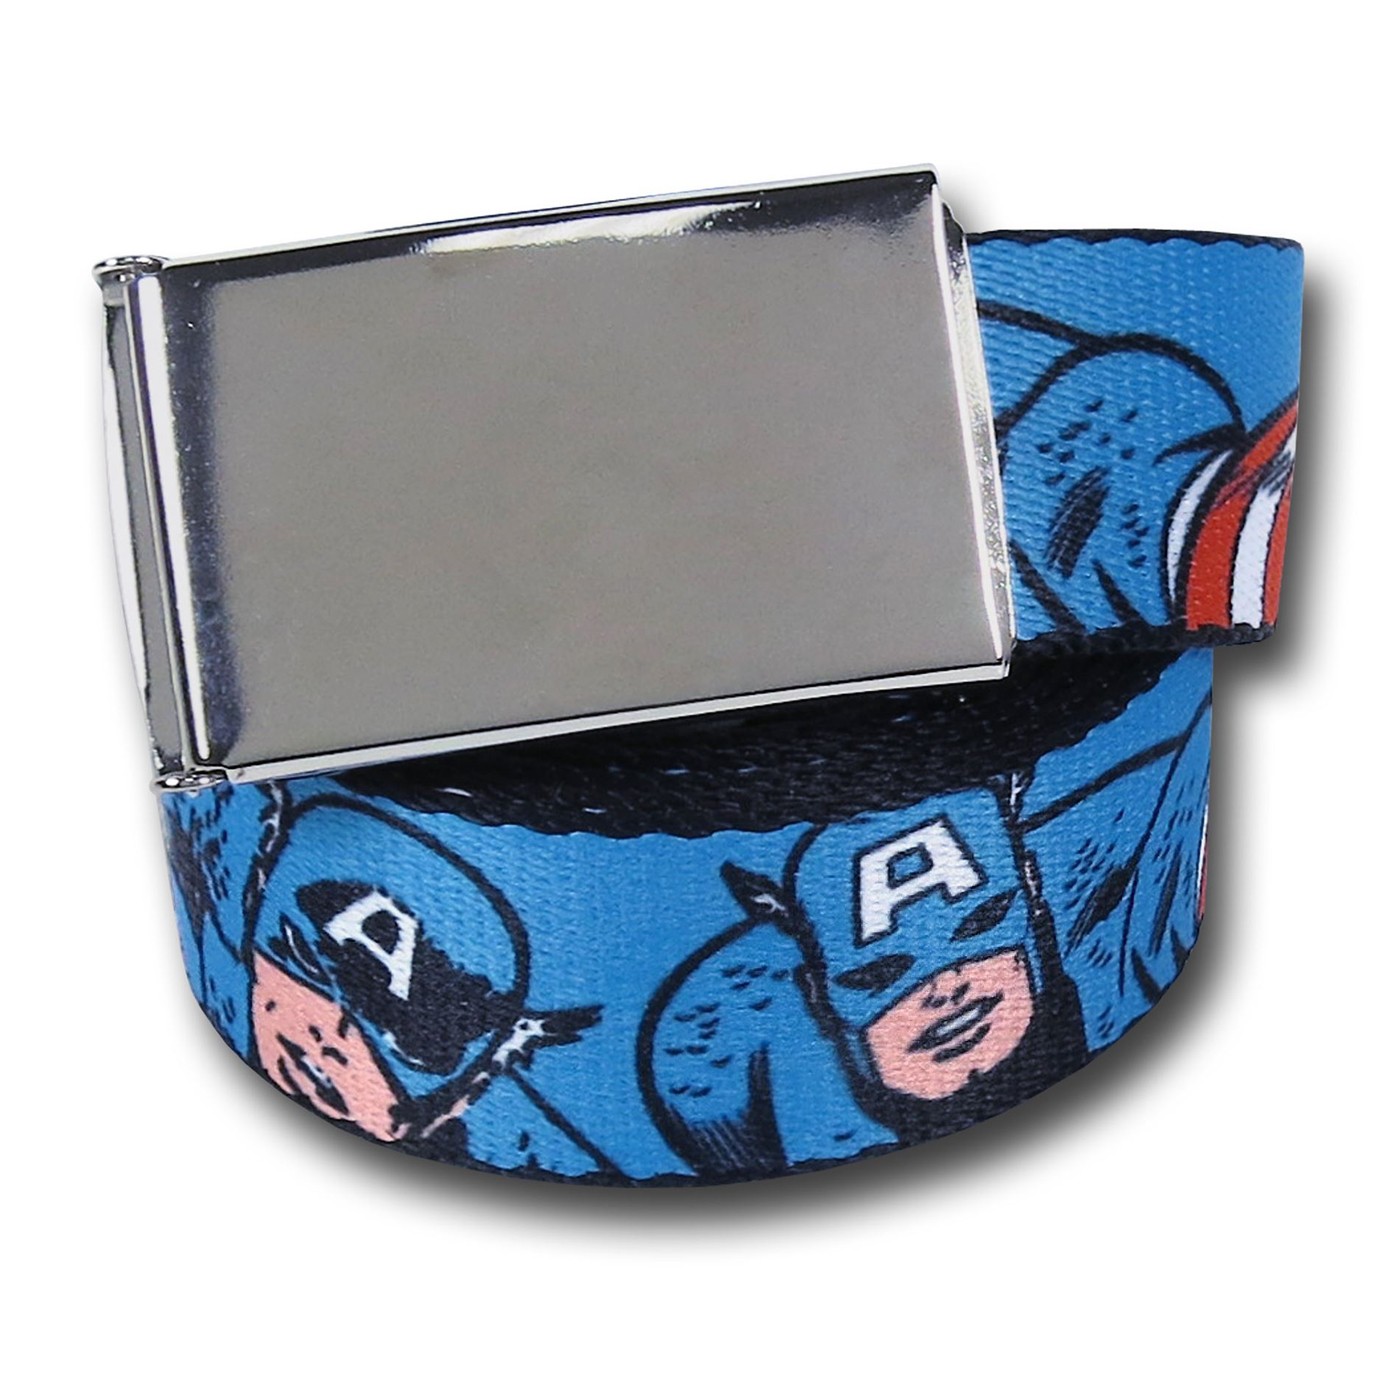 Captain America Retro Images Blue Web Belt